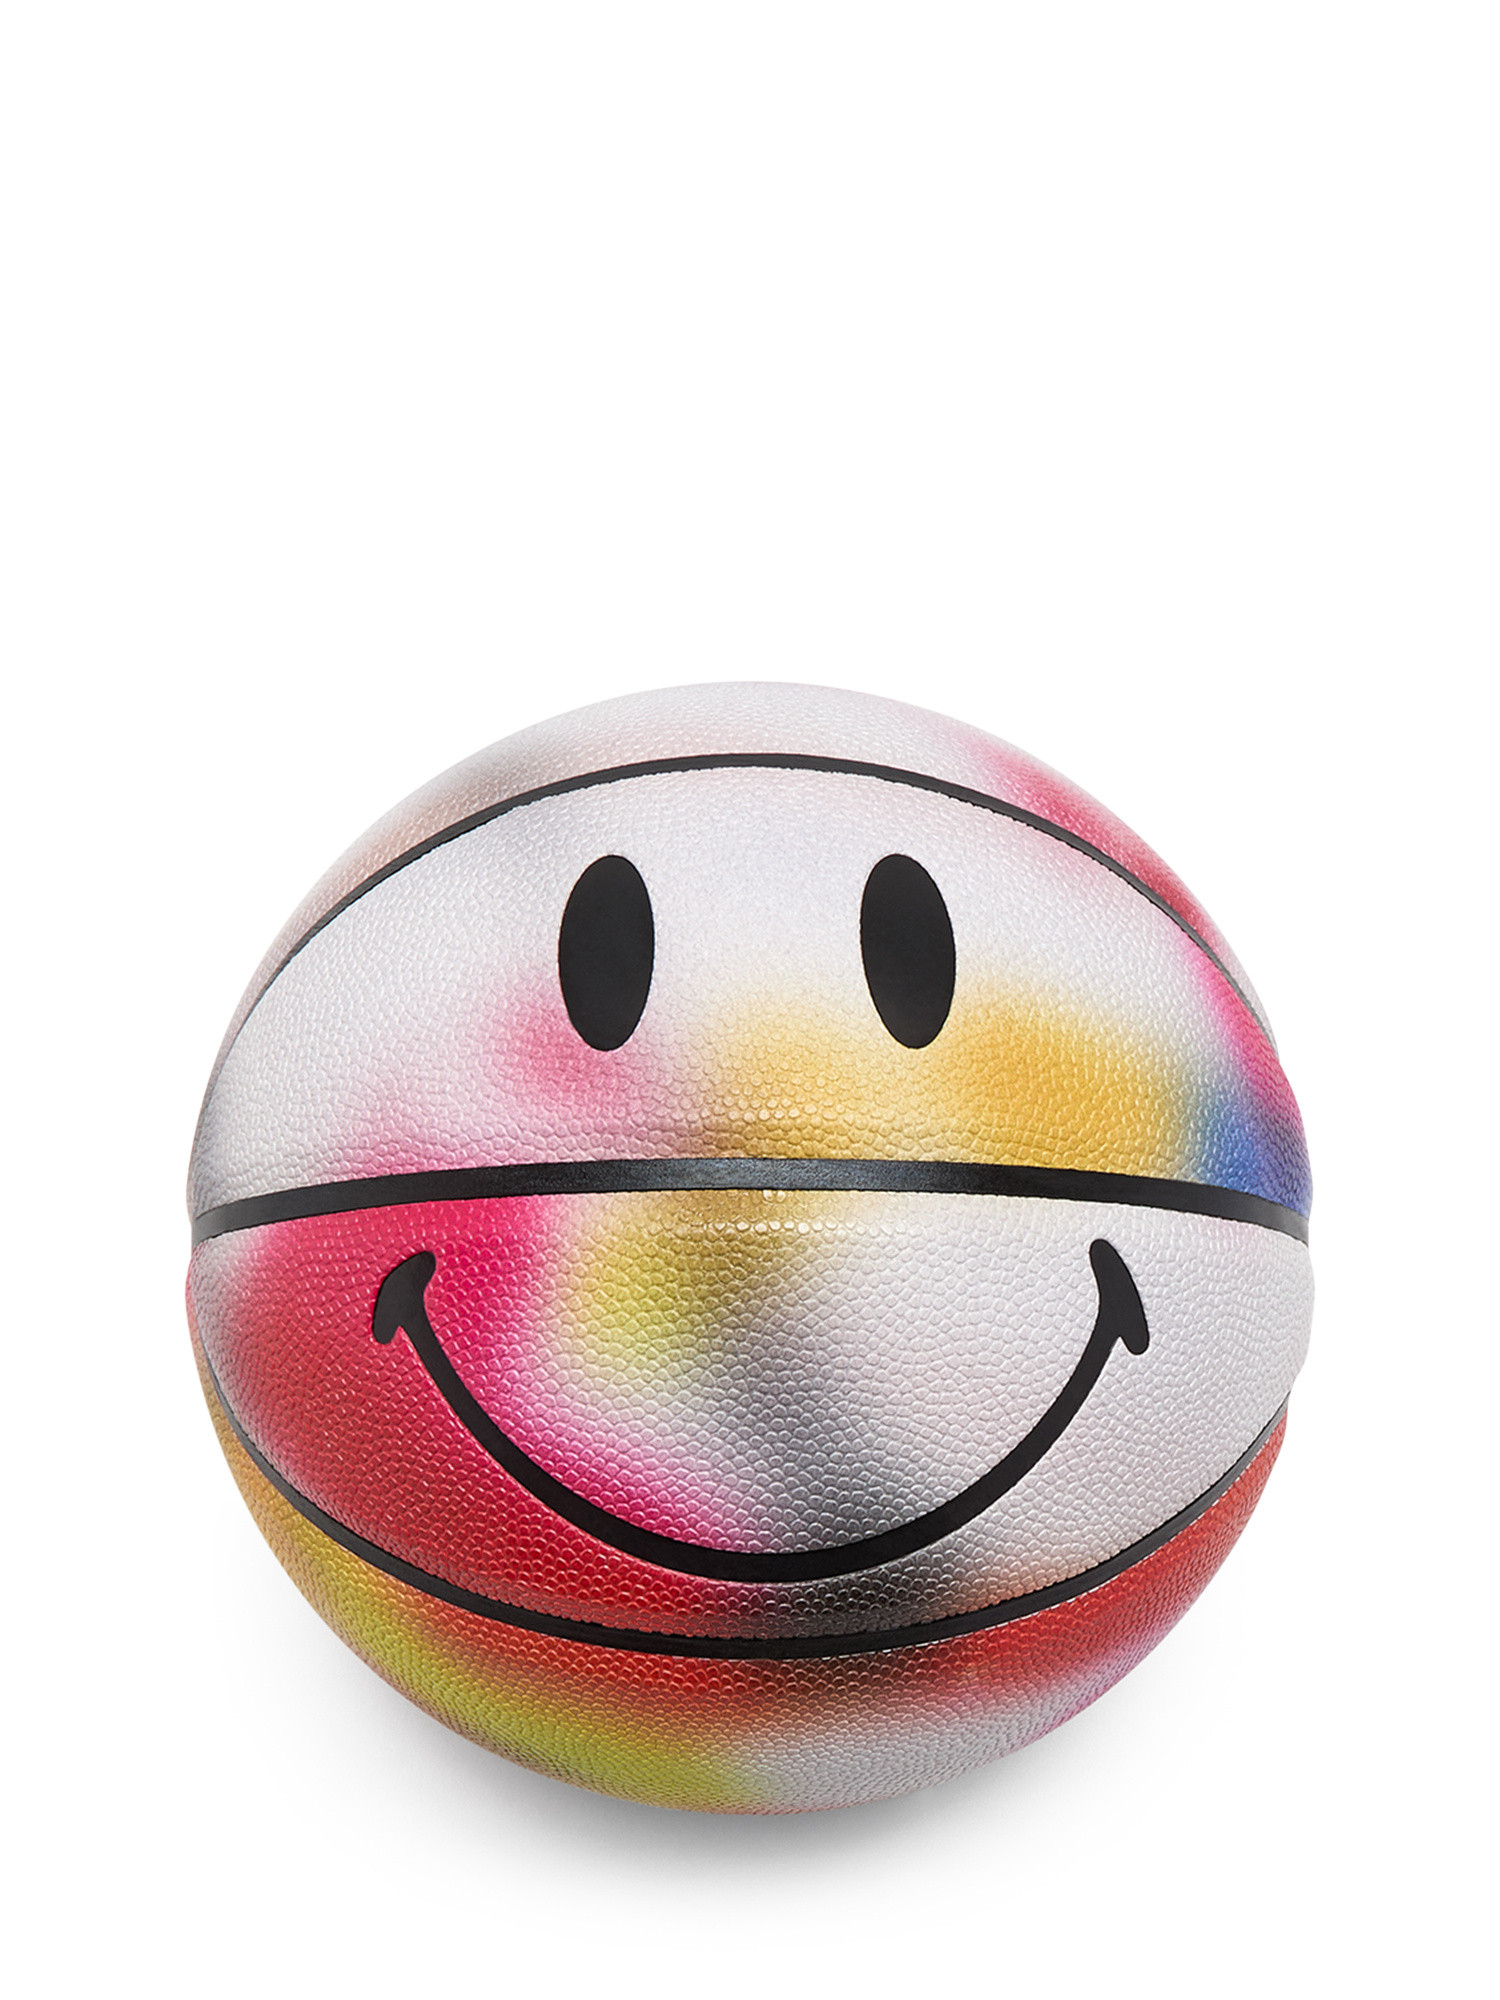 Market - Smiley® basketball, Multicolor, large image number 1